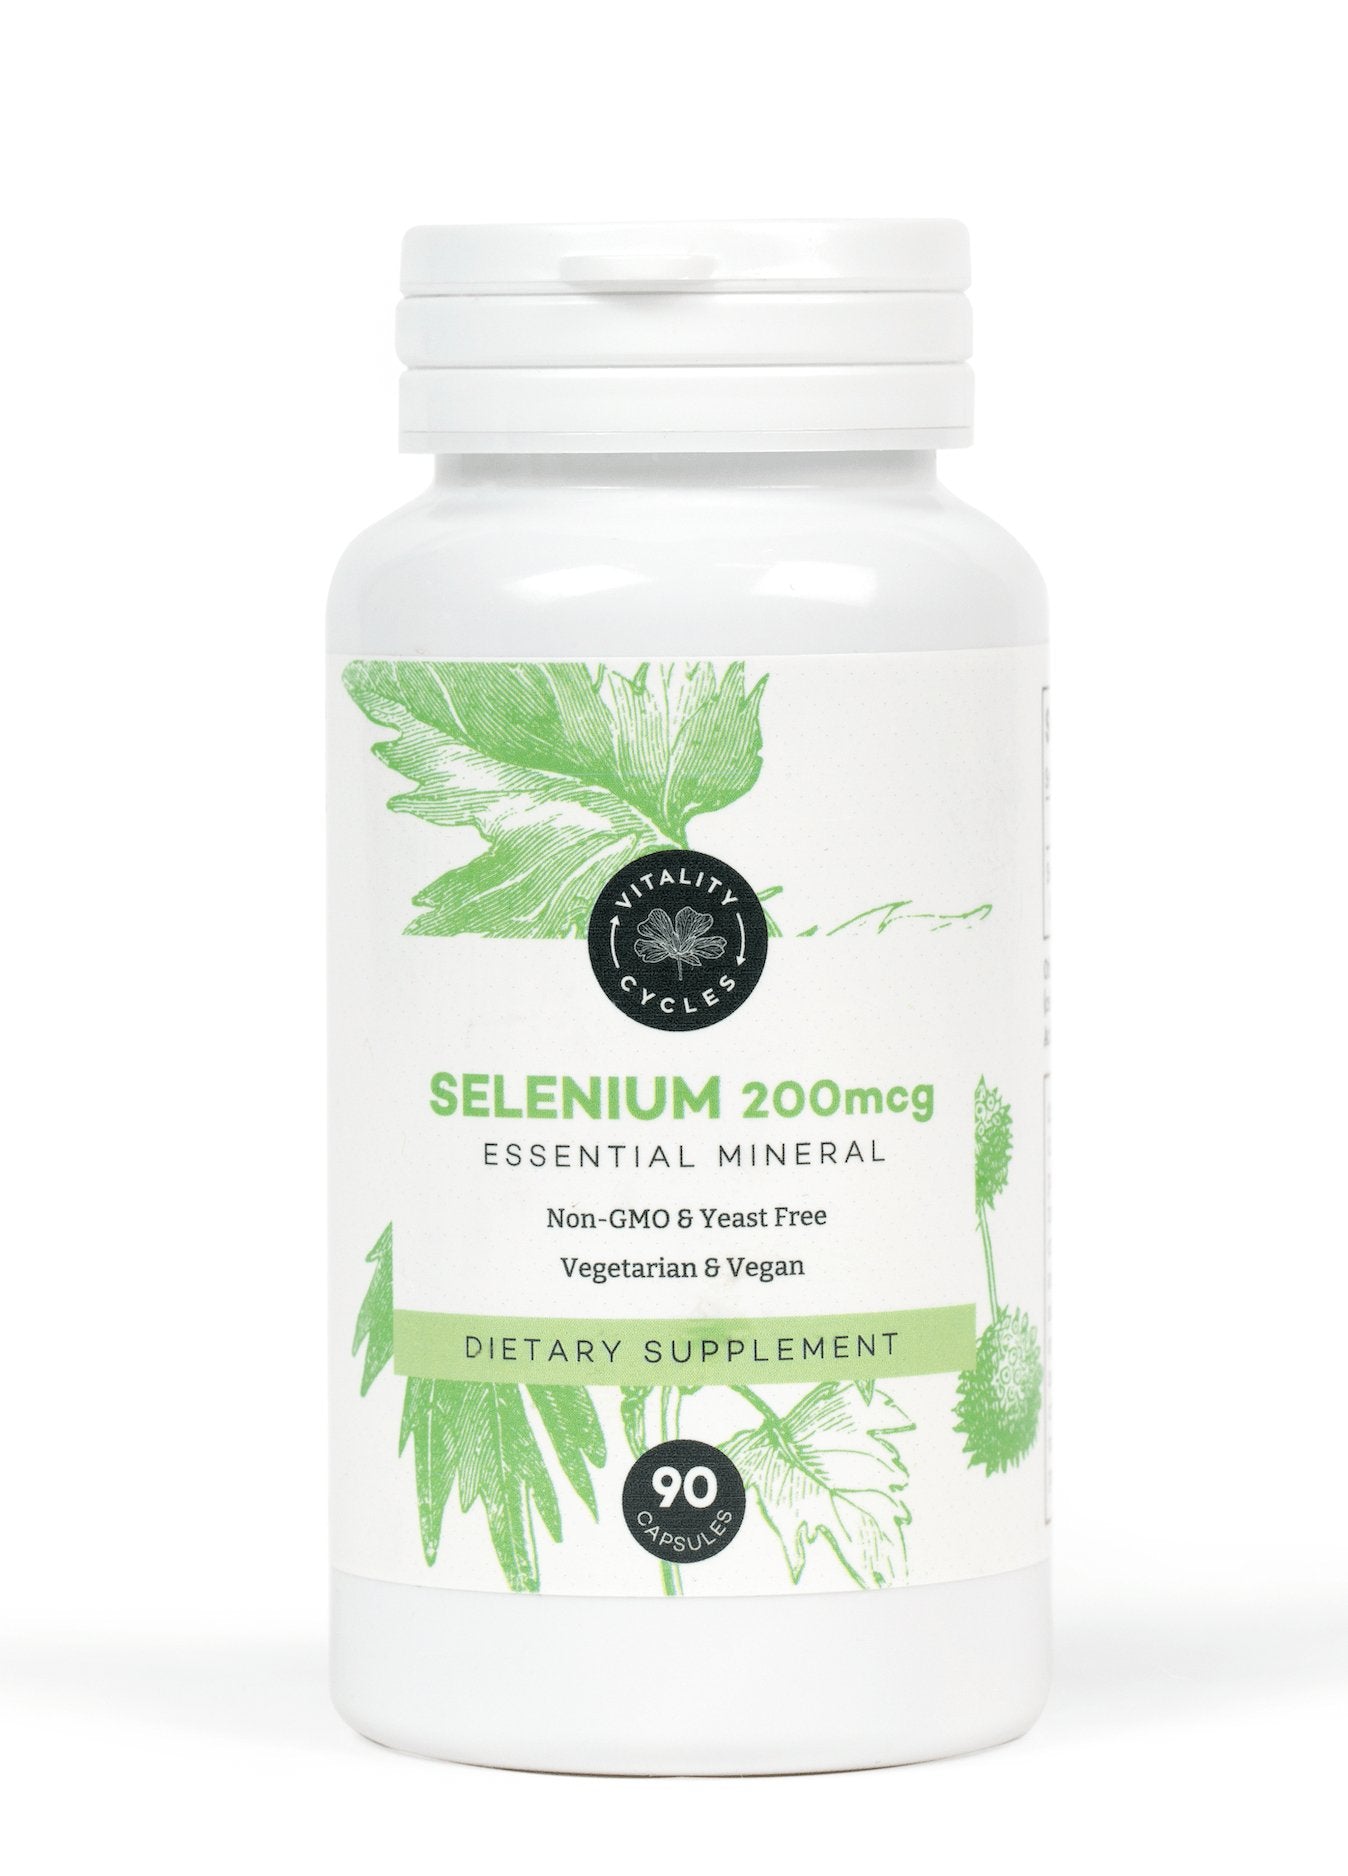 Selenium - Vitality Cycles